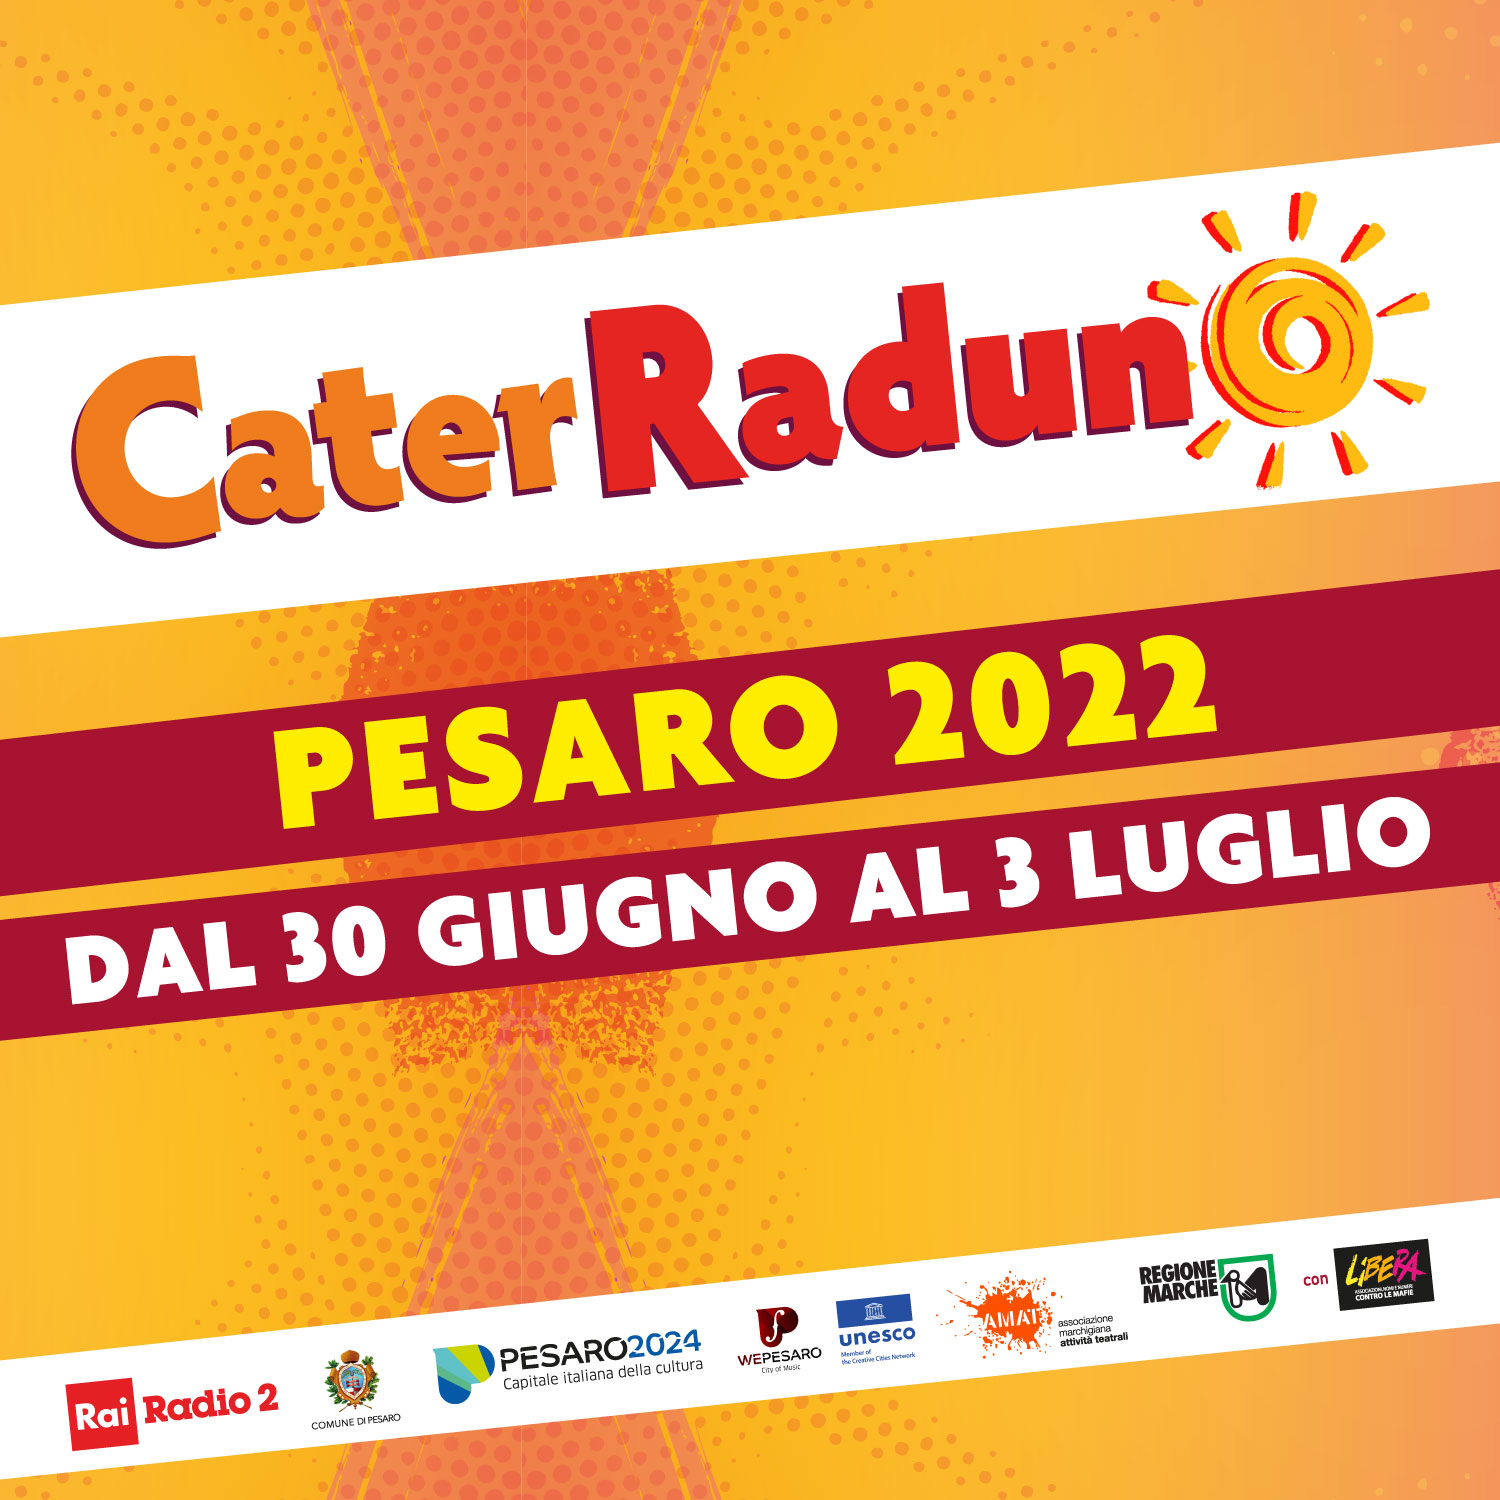 CaterRaduno Pesaro 2022